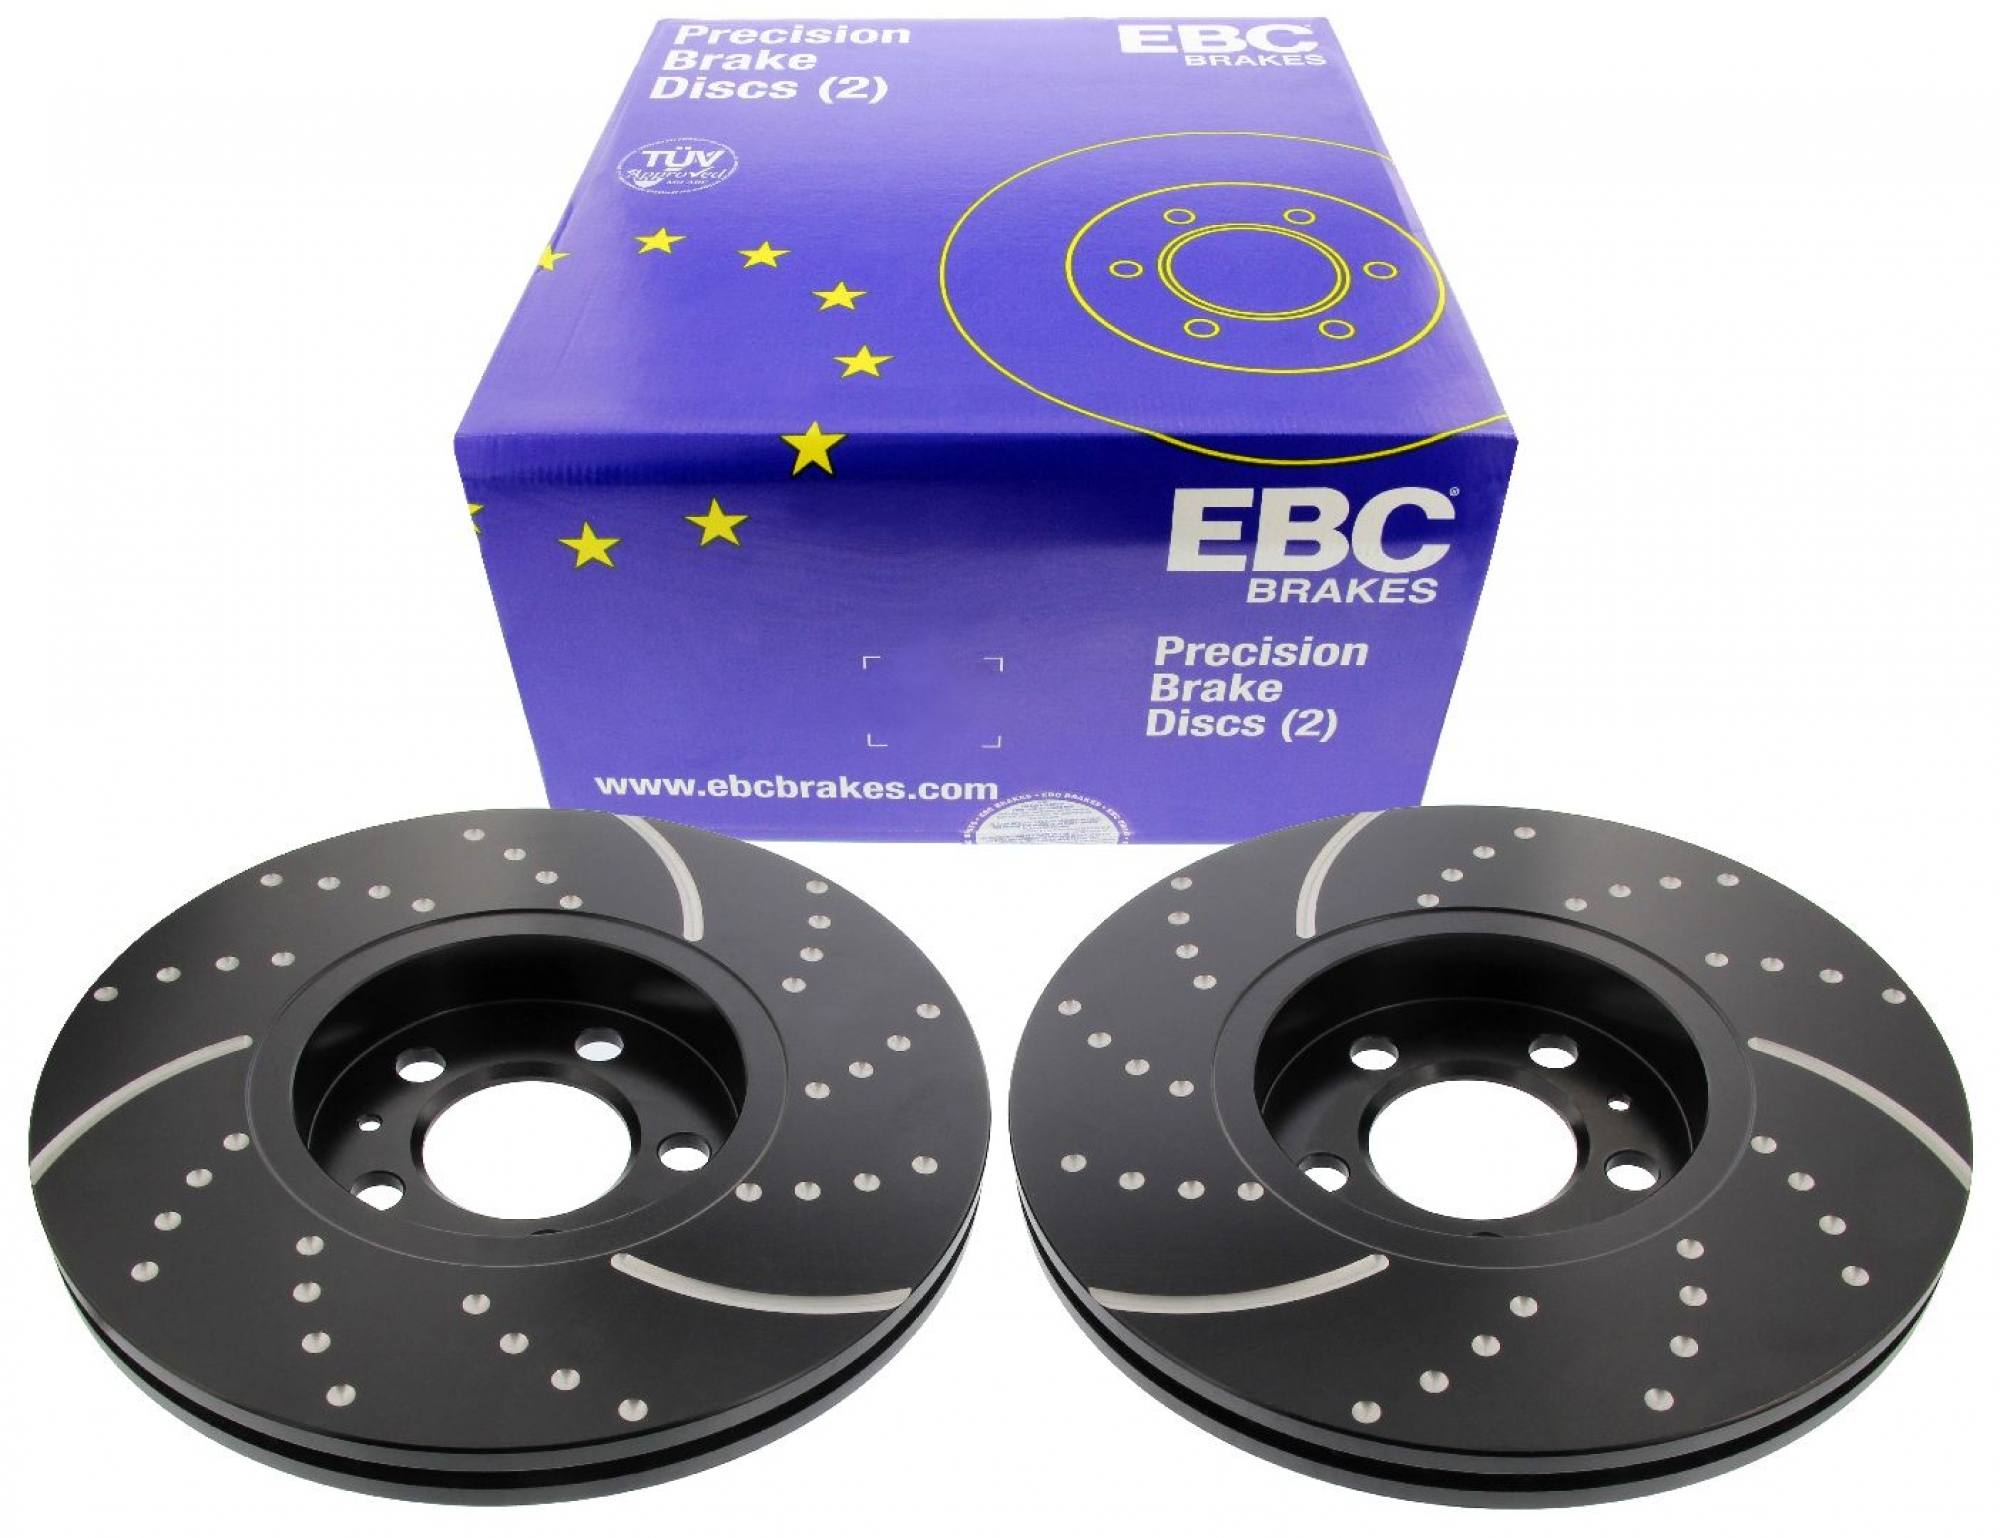 EBC-Bremsscheiben, Turbo Groove Disc Black (2-teilig), VA, VW Golf 4, Audi A3, 1.8T, Ø 288 mm